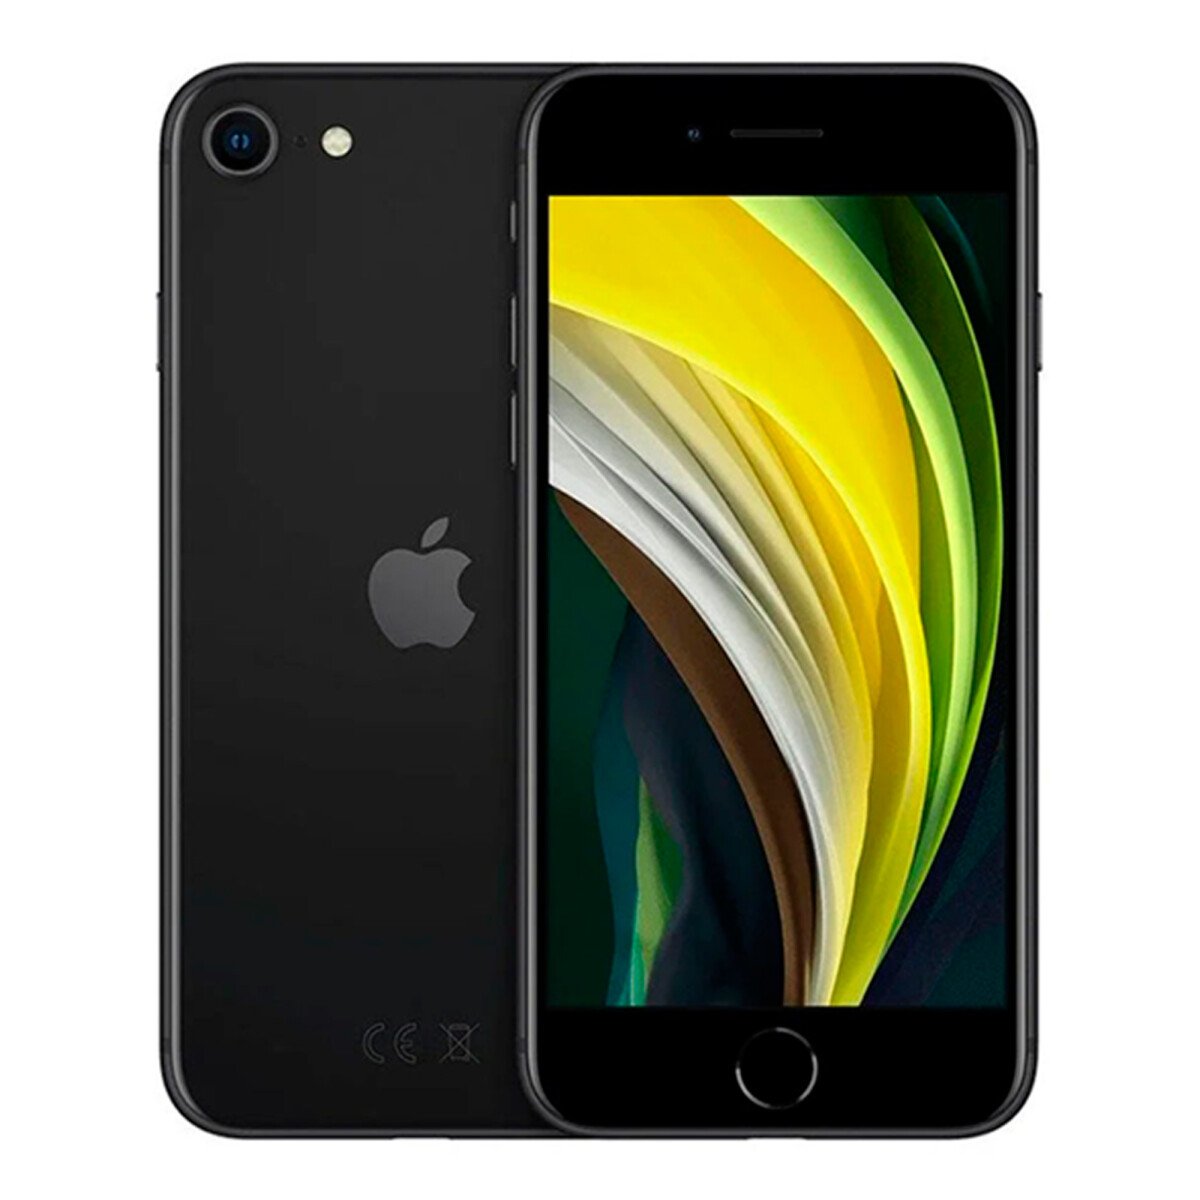 Apple - Celular Smartphone Iphone se 2 - IP67. 4,7" Multitáctil Retina Ips Lcd Capacitiva. 4G. 6 Cor - 001 